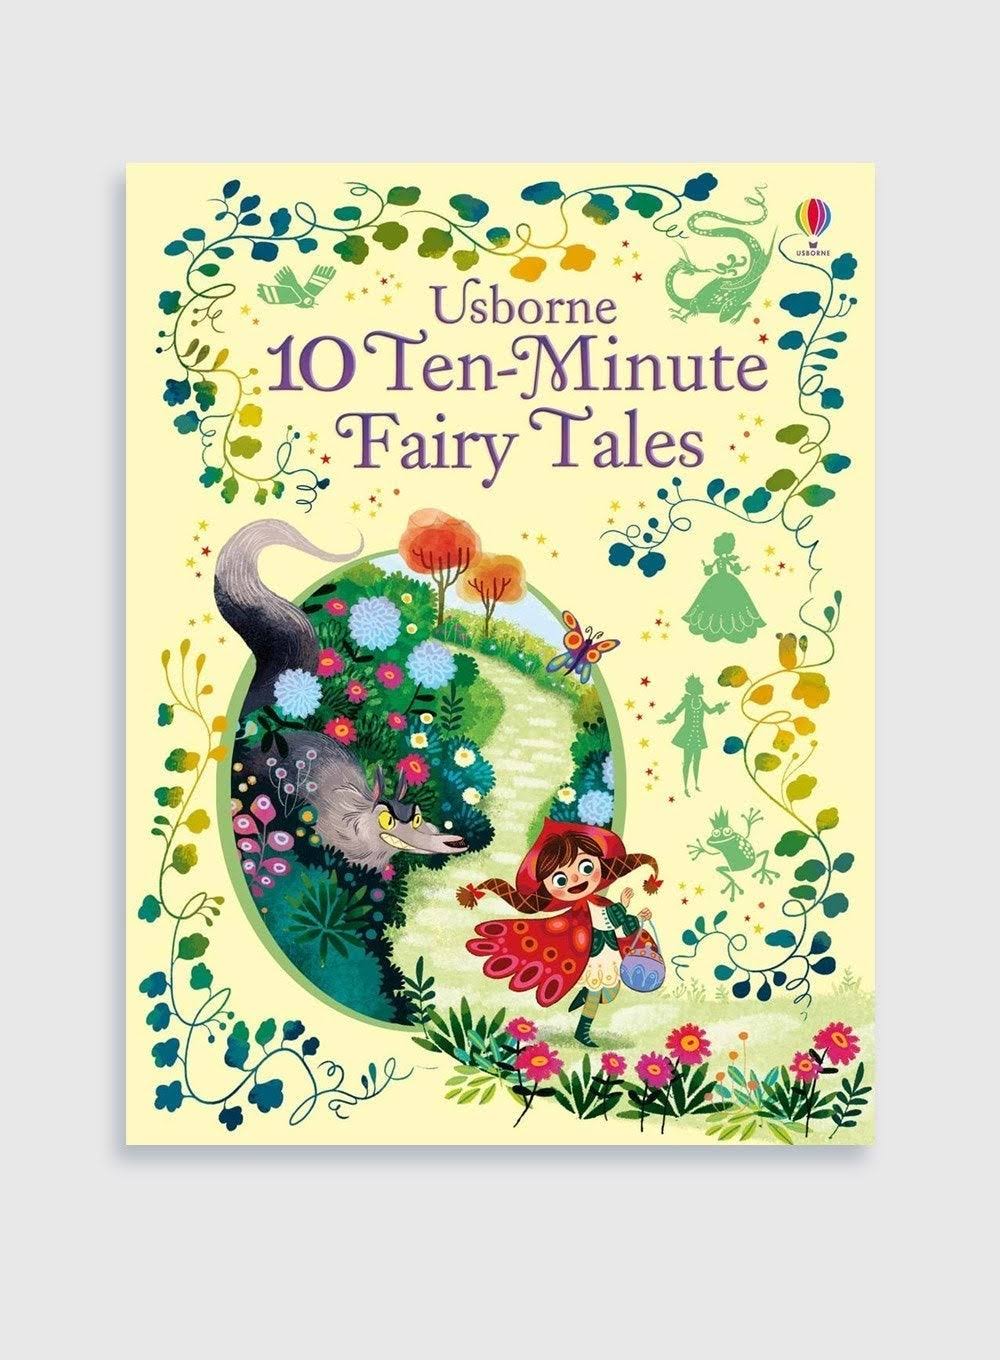 Usborne 10 Ten-Minute Fairy Tales - Lesley Sims